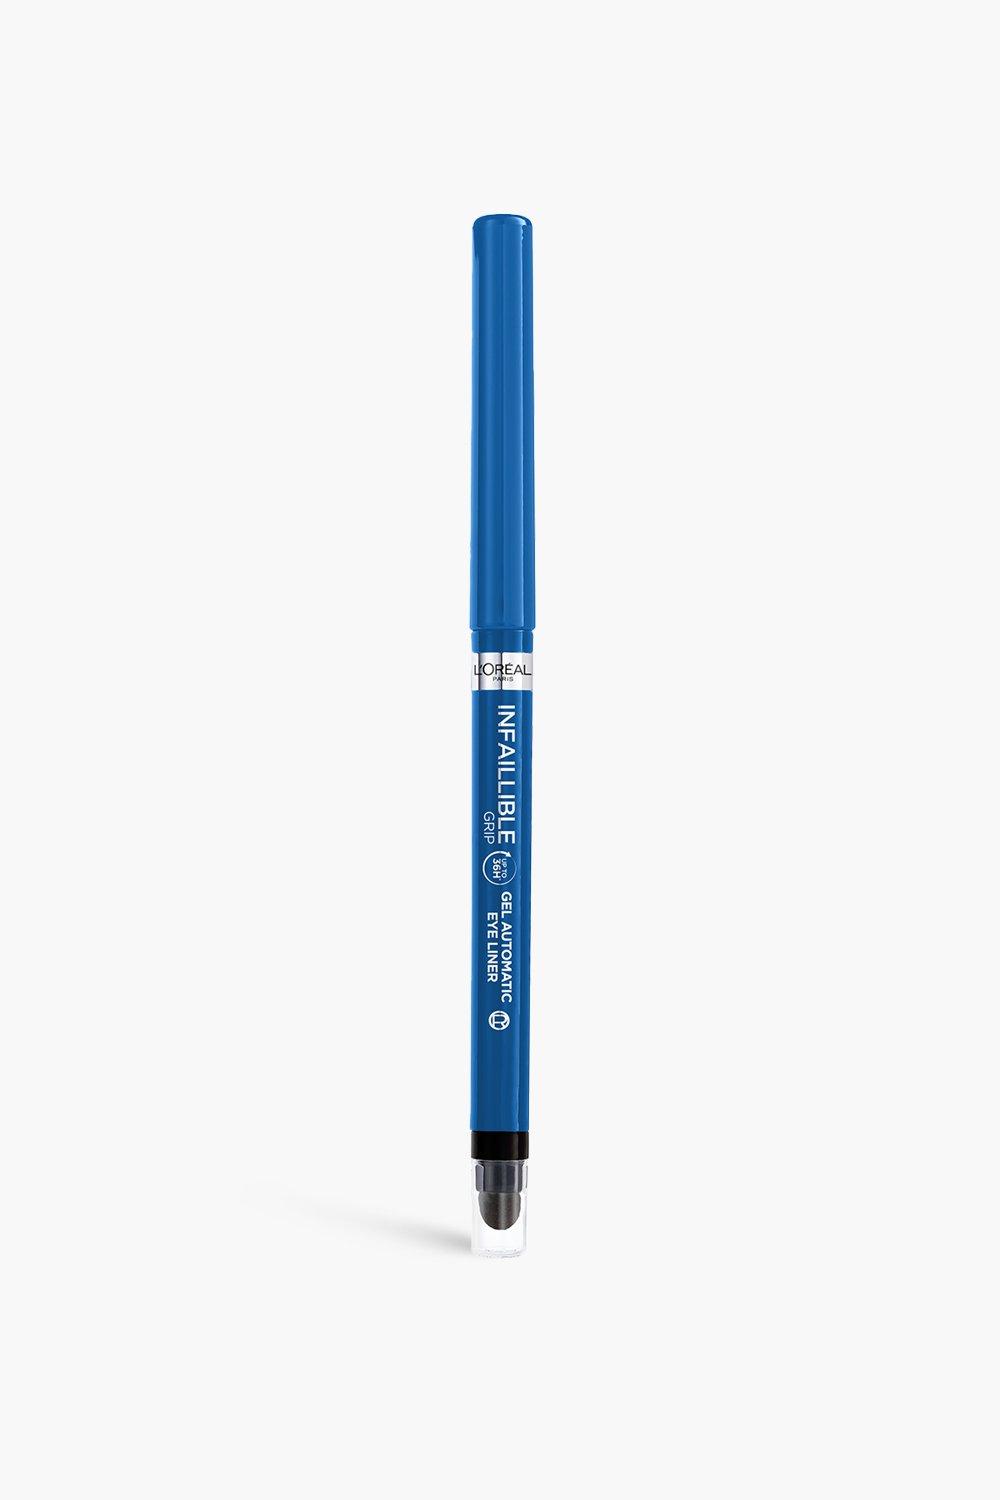 L'Oreal Paris Infallible Grip 36H Gel Automatic Eyeliner, Blue